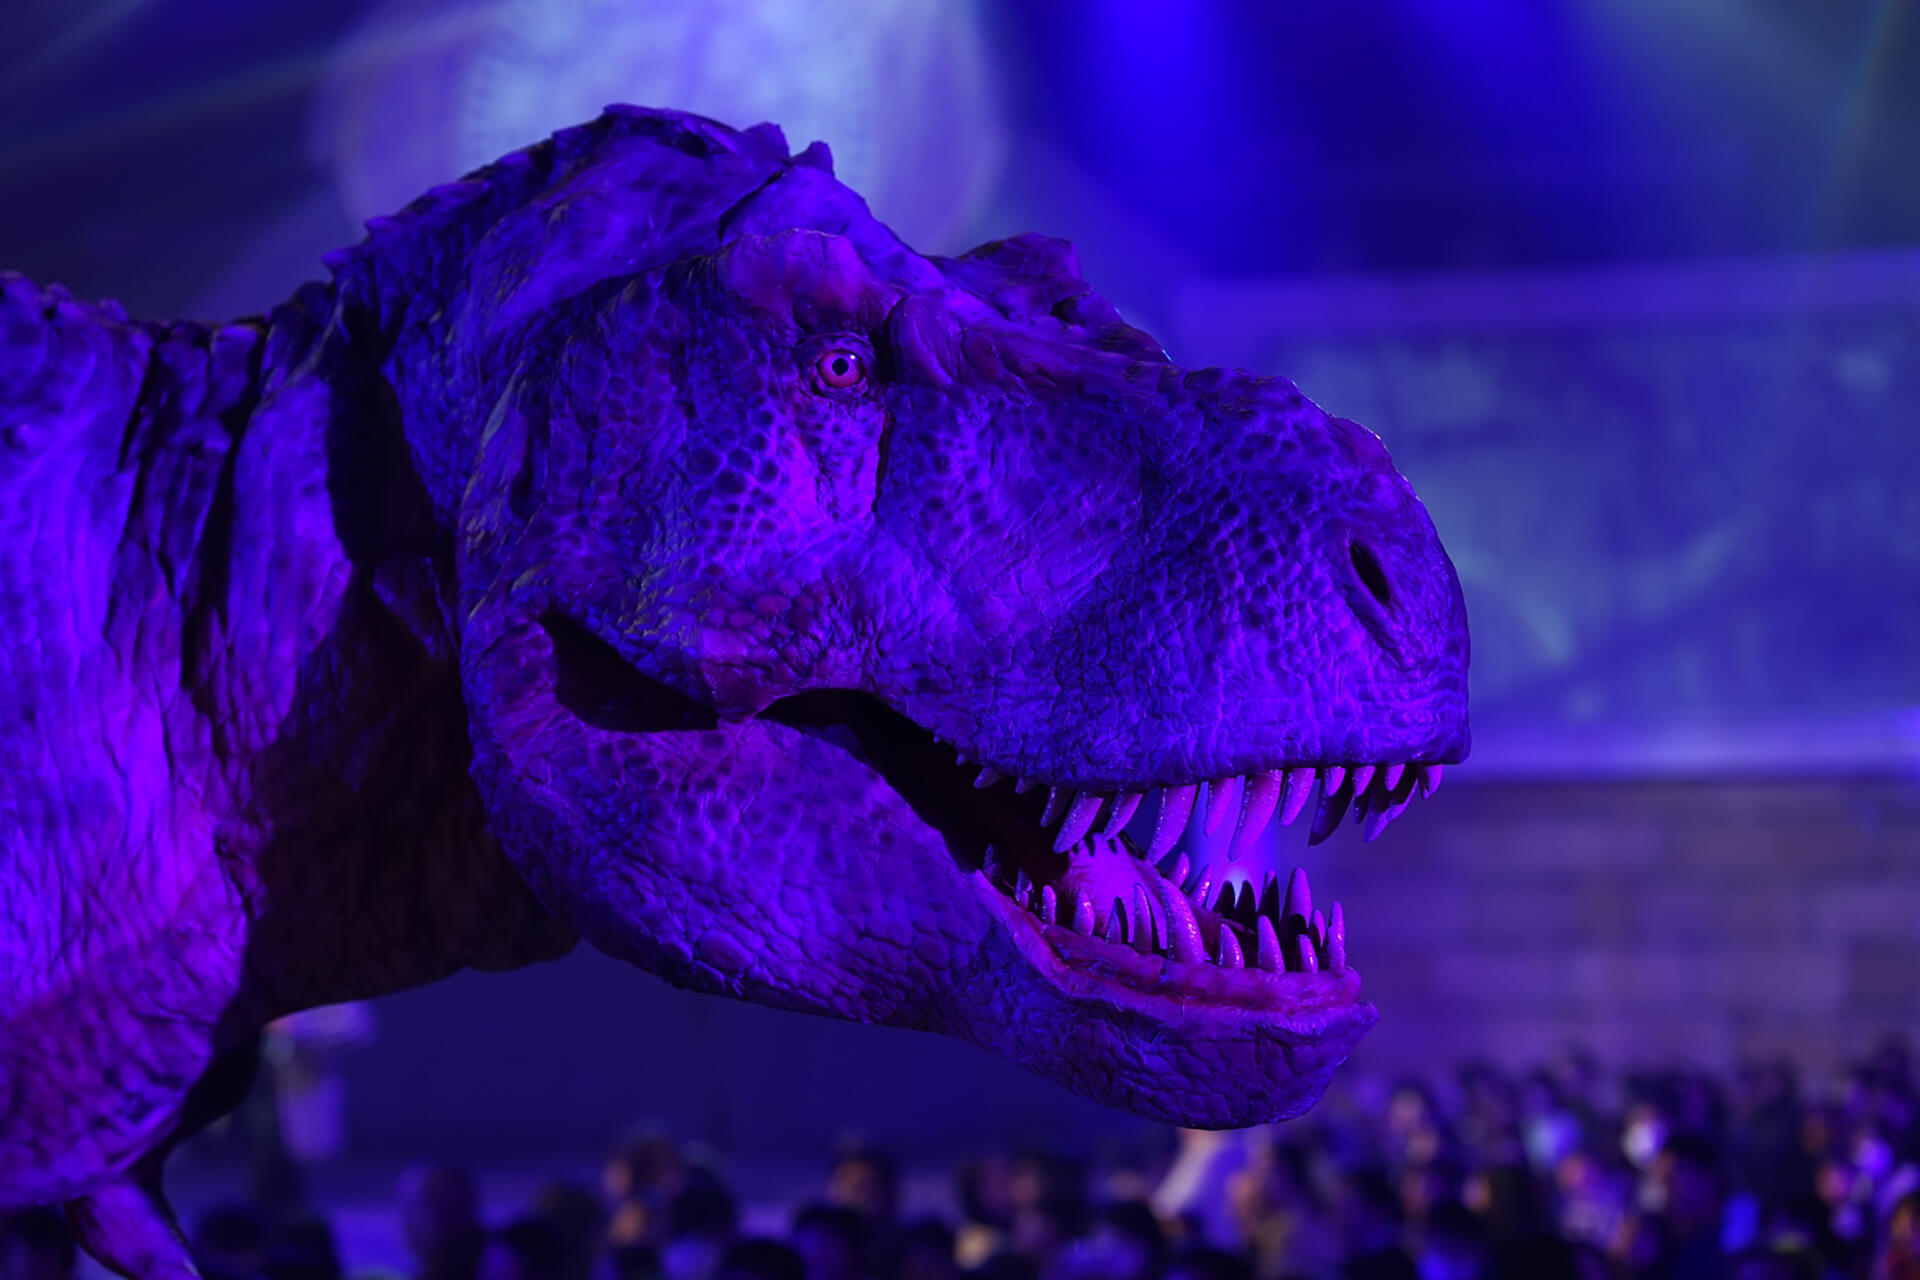 、「DINO-A-LIVE『不思議な恐竜博物館』 in TACHIKAWA」